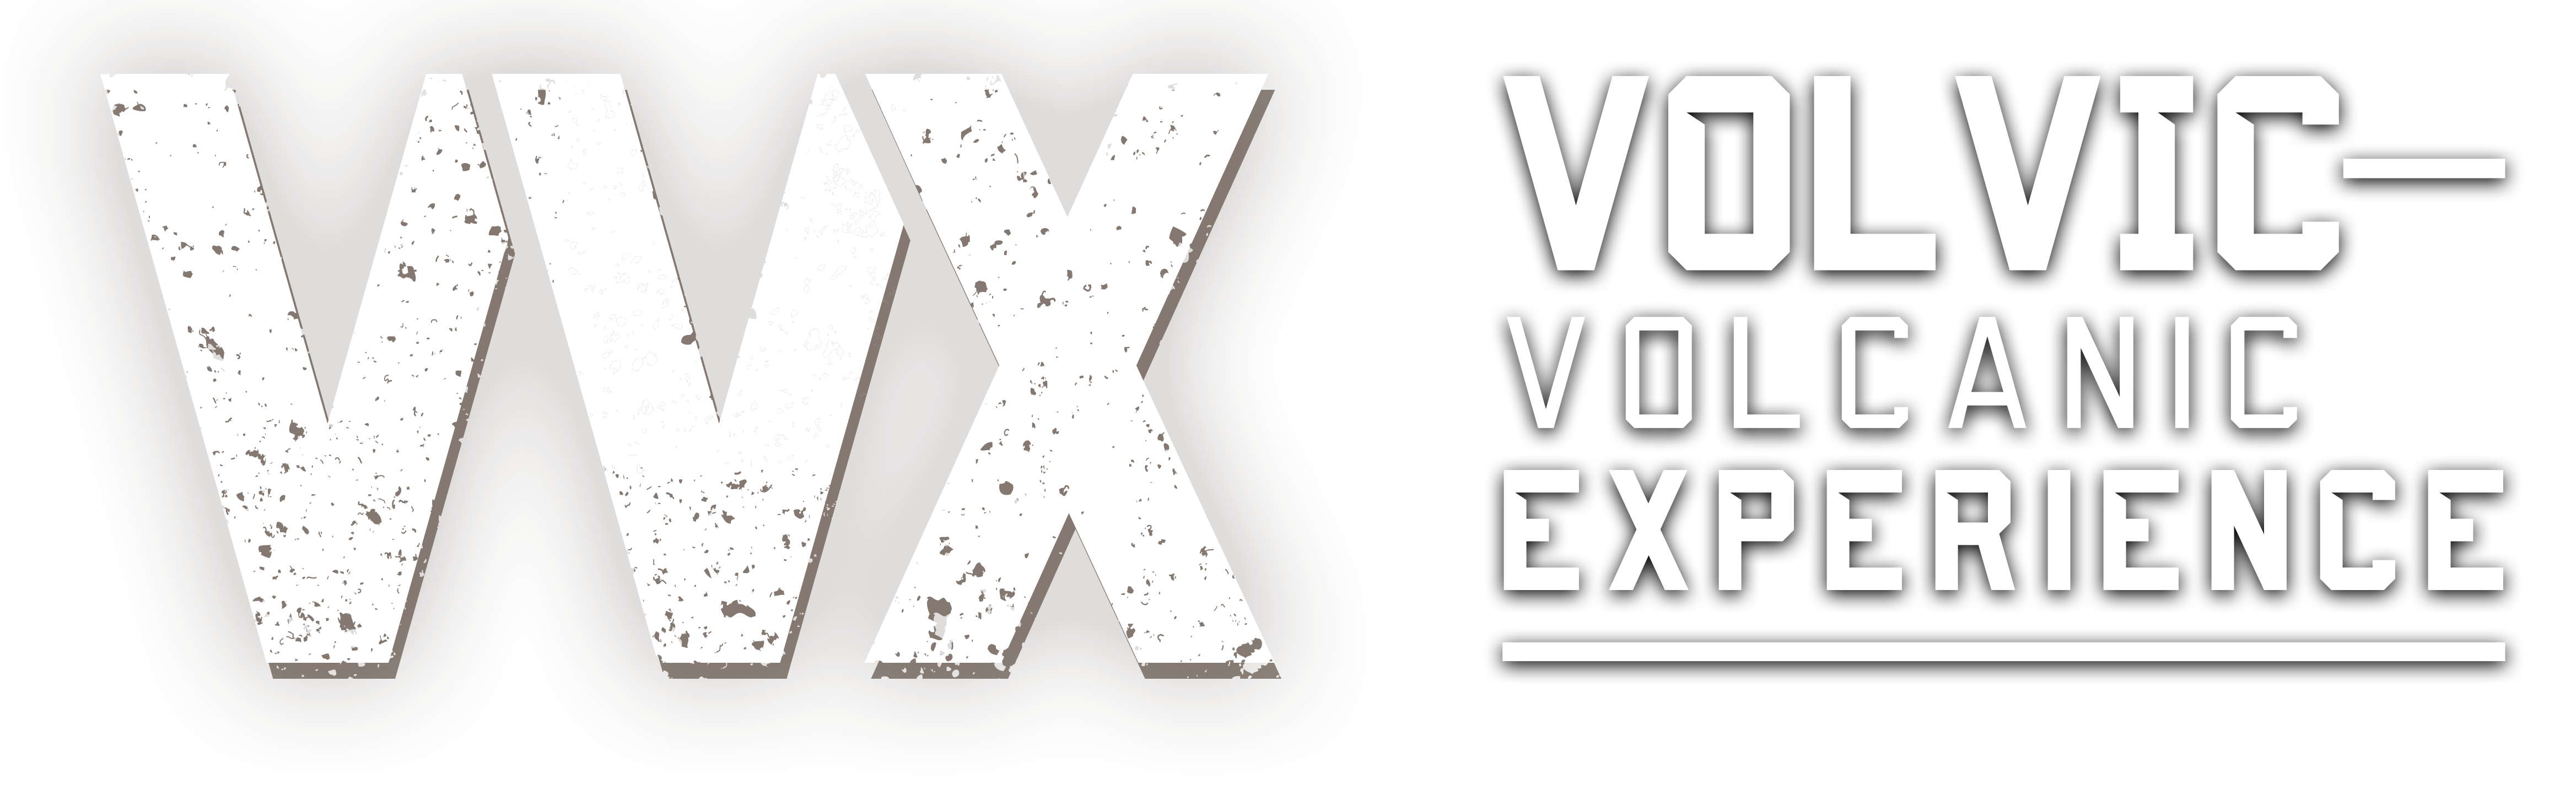 logo Volvic Volcanic Experience